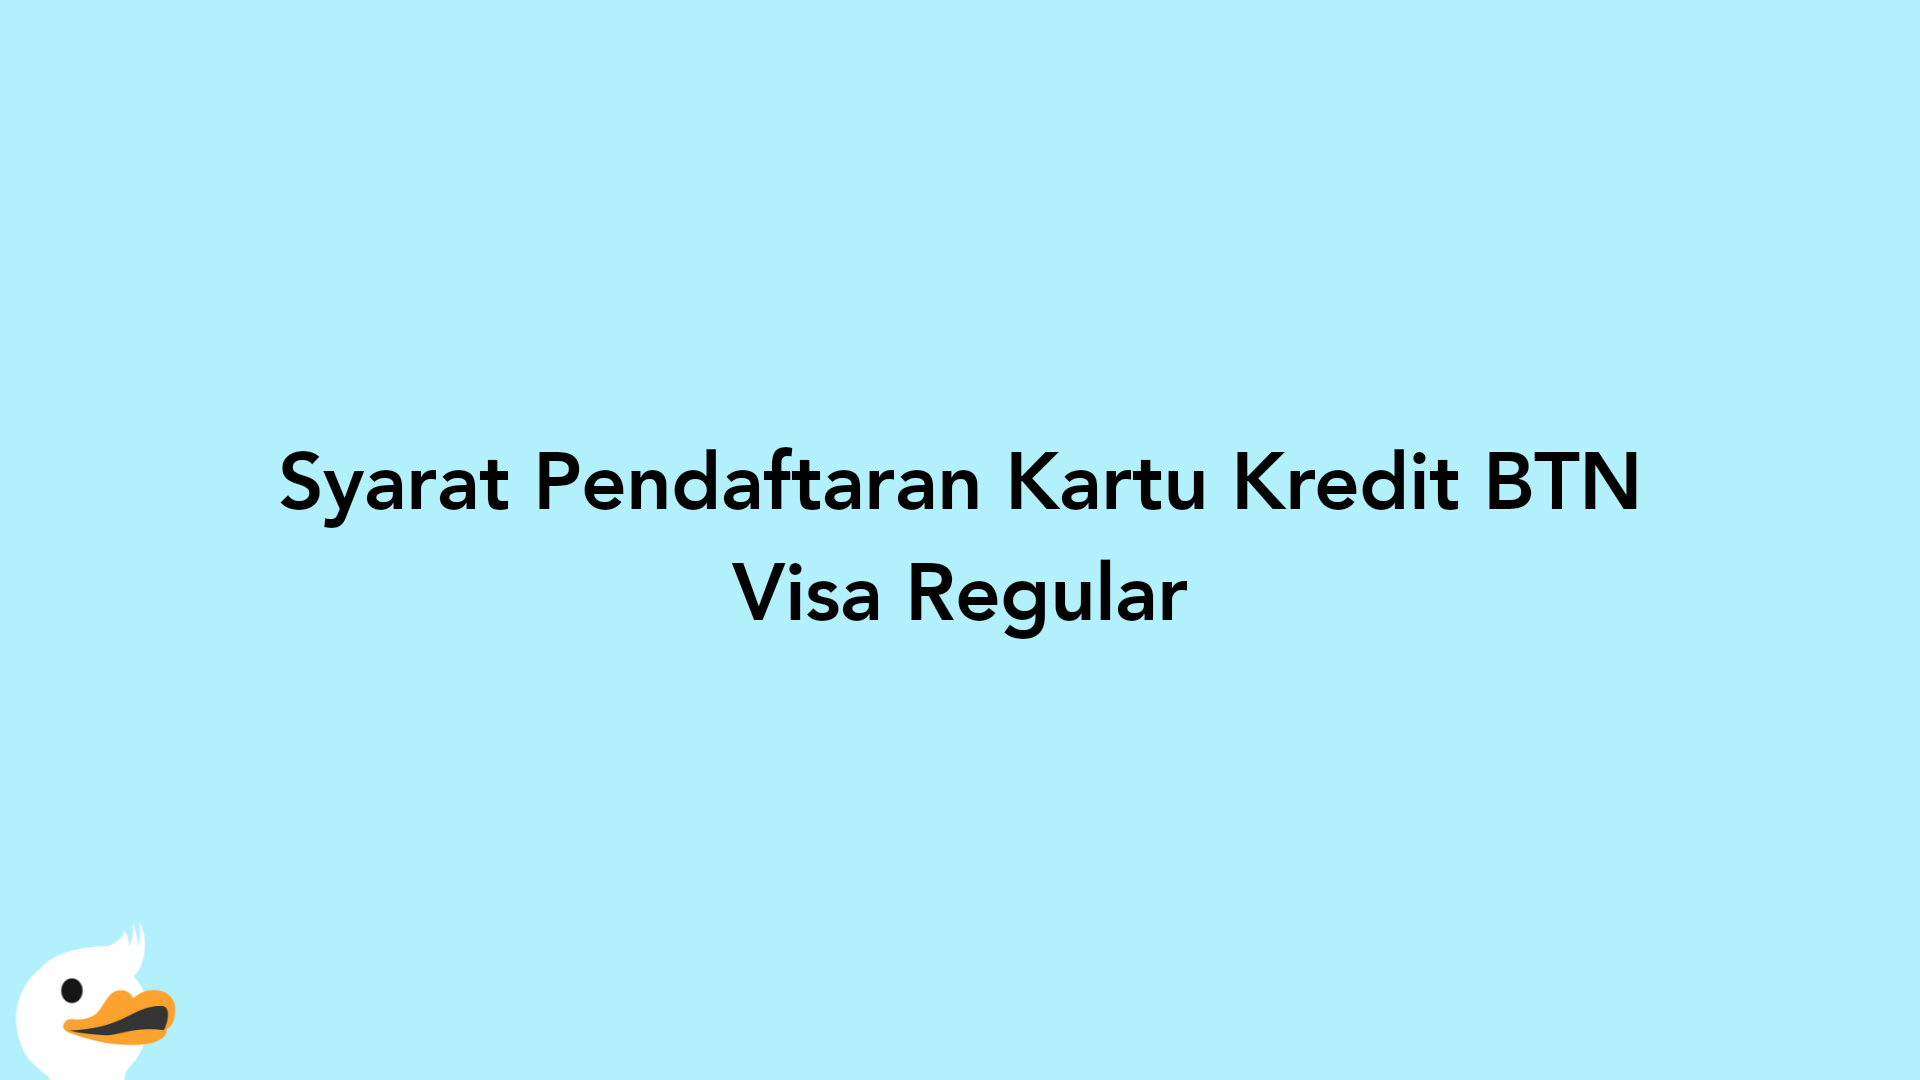 Syarat Pendaftaran Kartu Kredit BTN Visa Regular